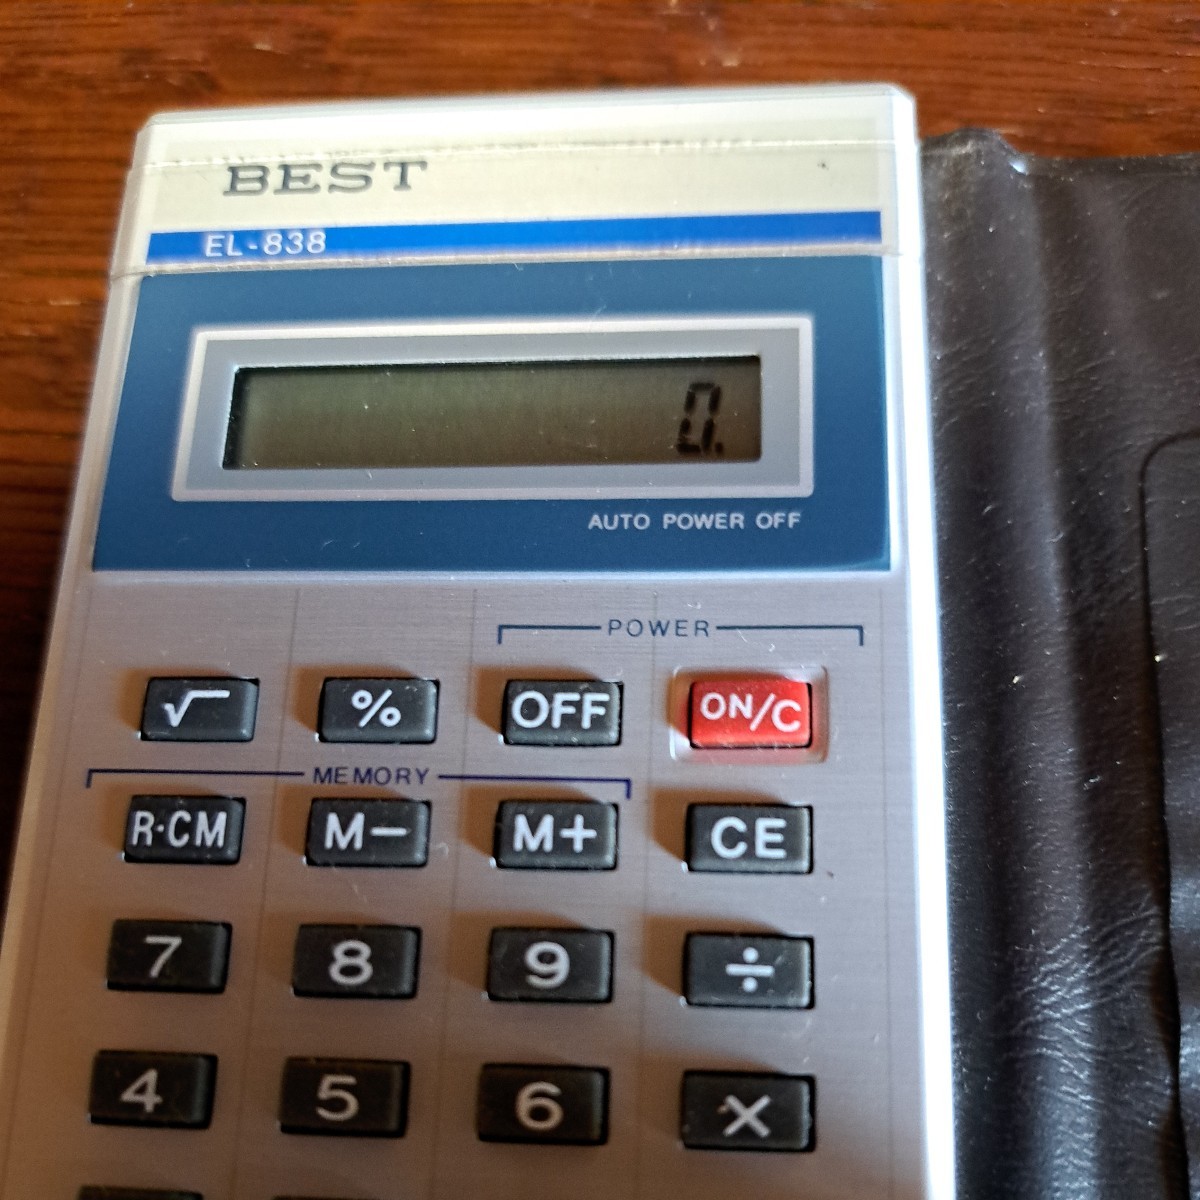  calculator Showa Retro count machine Mini type calculator EL-838